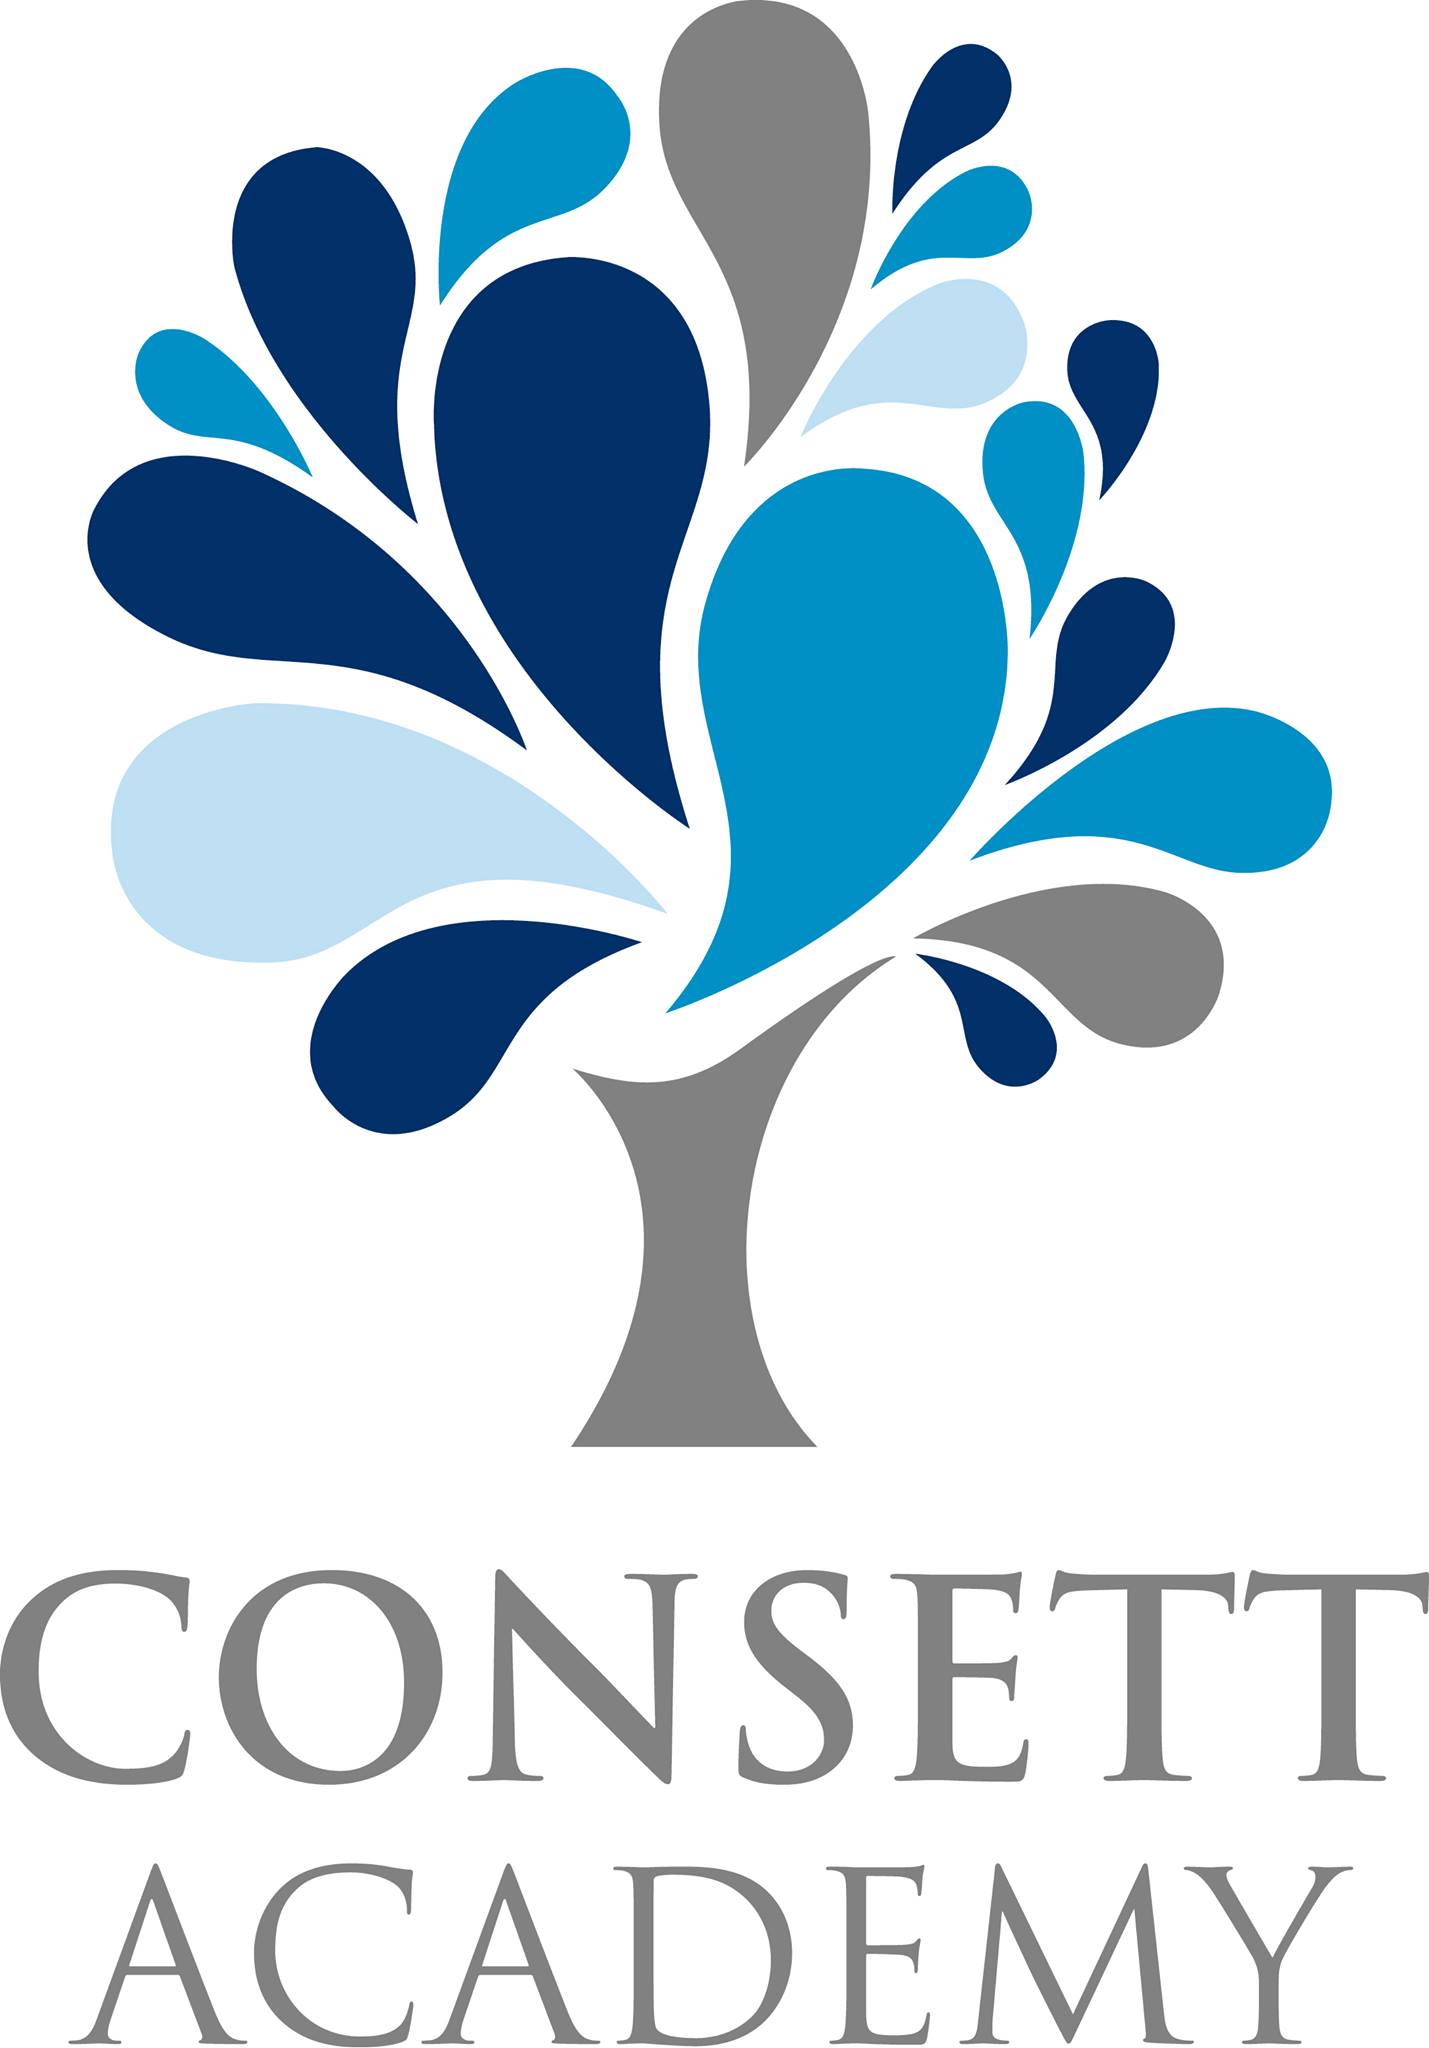 Consett Academy校徽